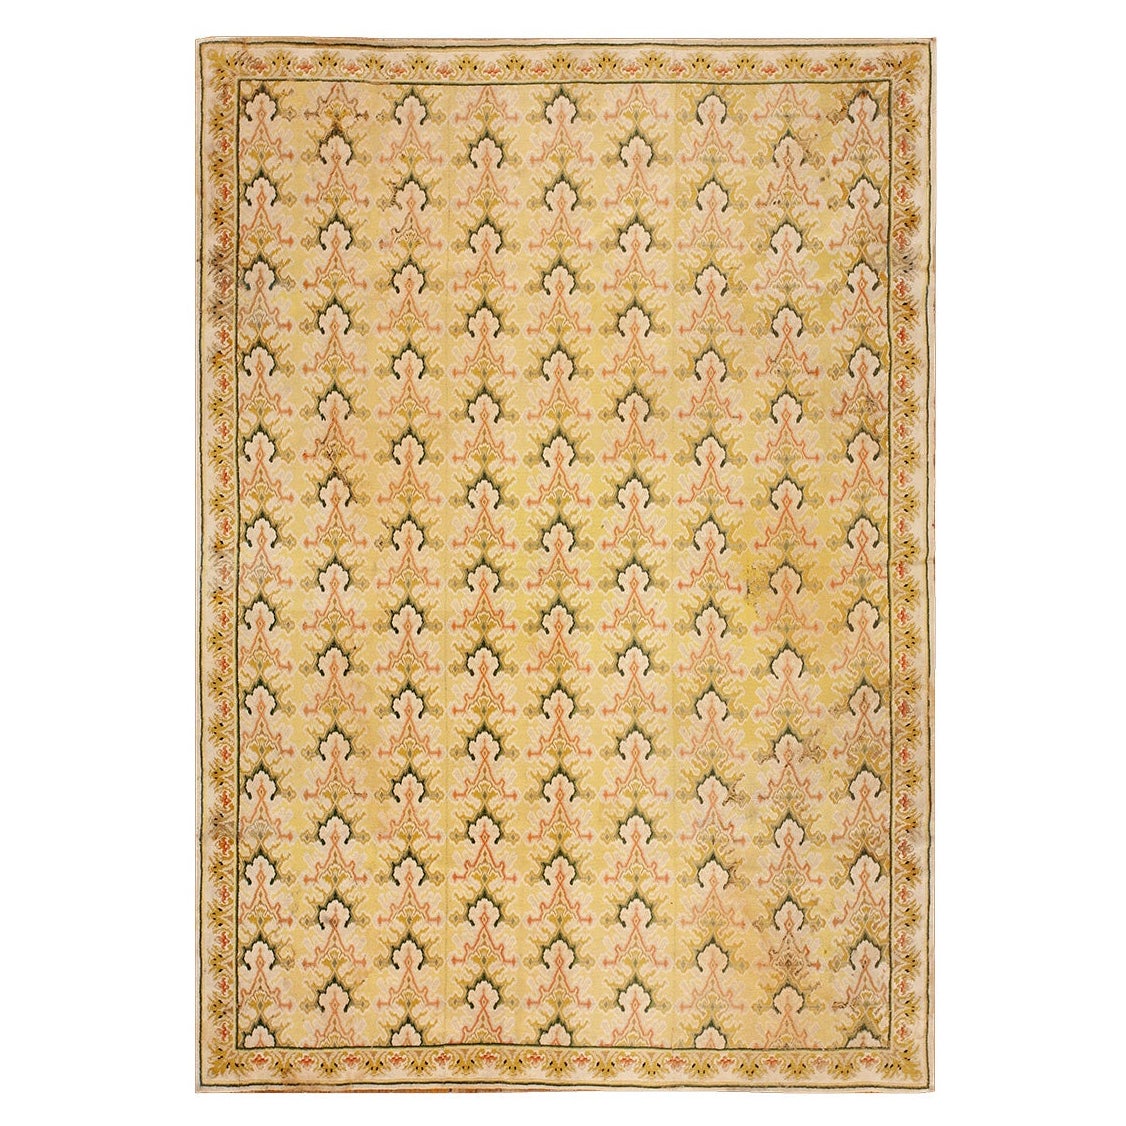 19th Century French Needlepoint Carpet ( 8' x 10'2" - 244 x 310 )